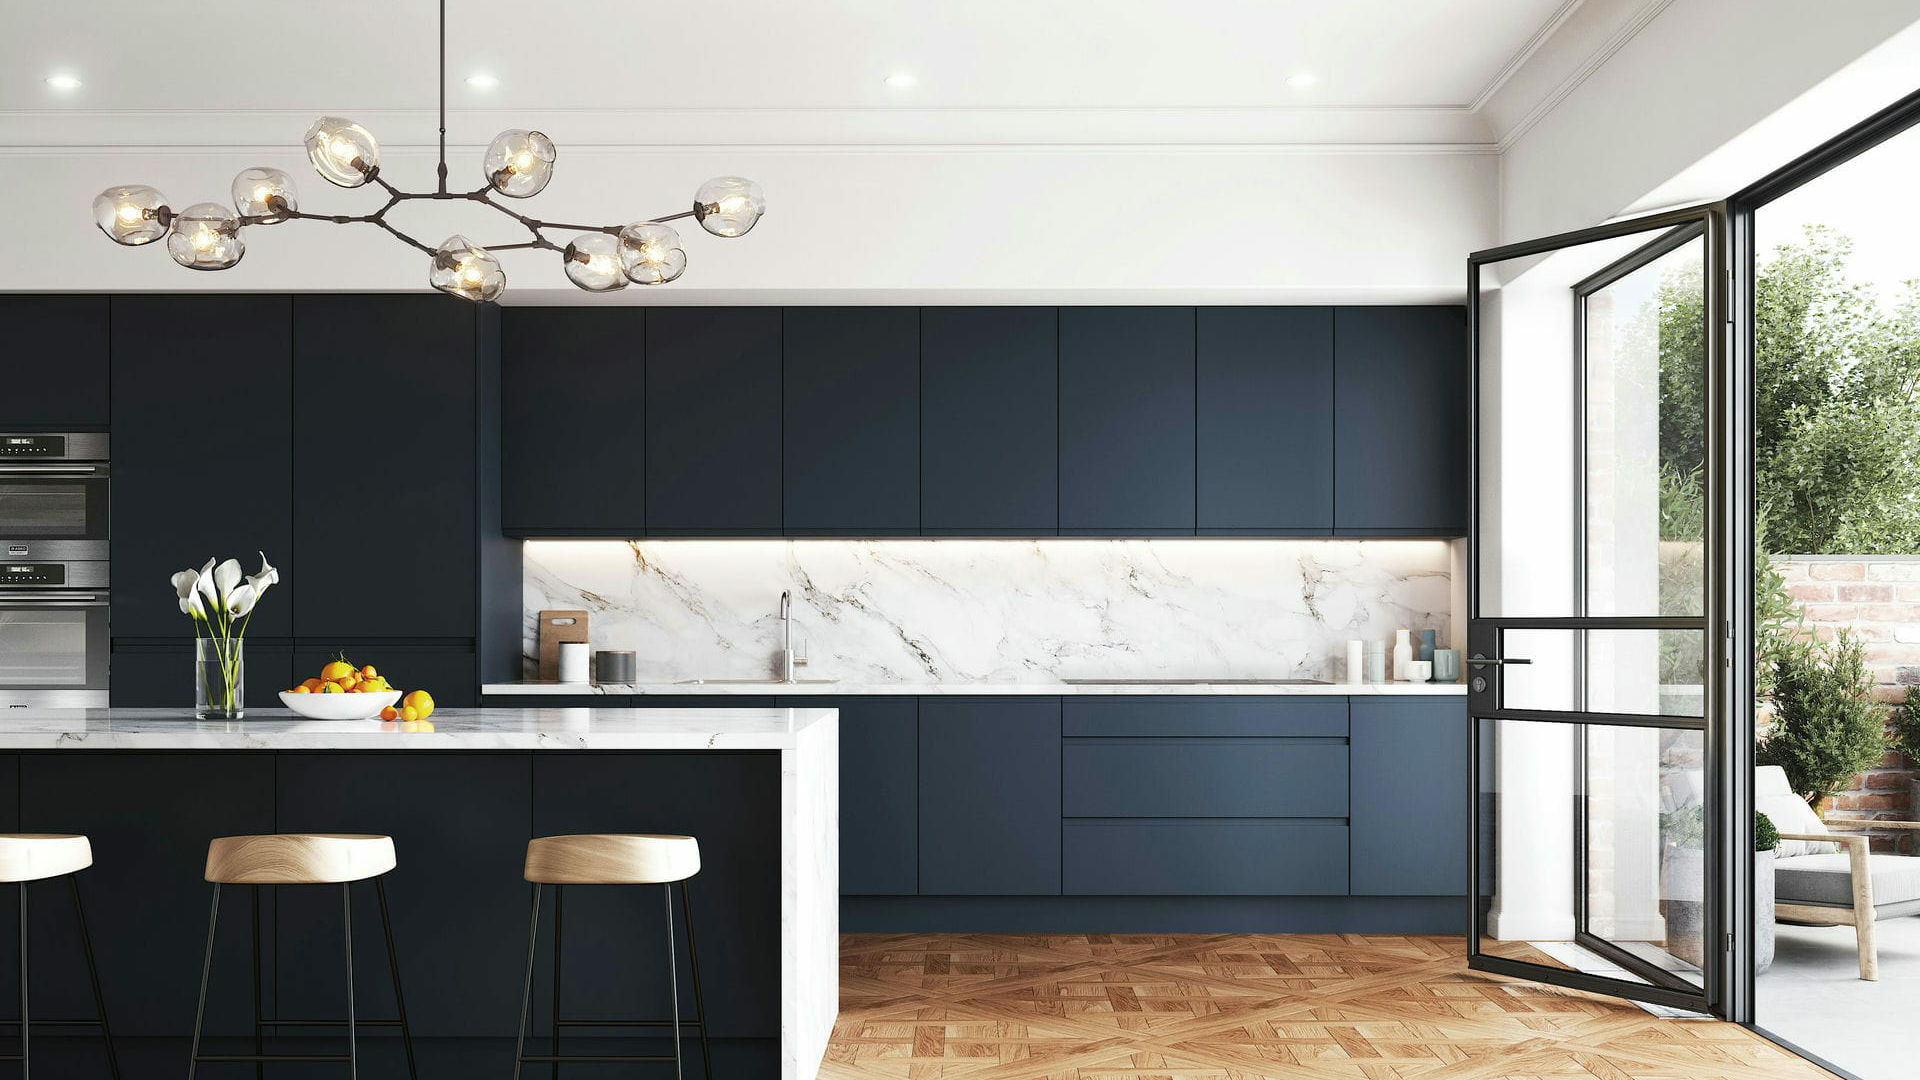 Handleless Matt Indigo kitchens offering a sleek profile in a bold indigo blue, perfect for contemporary spaces